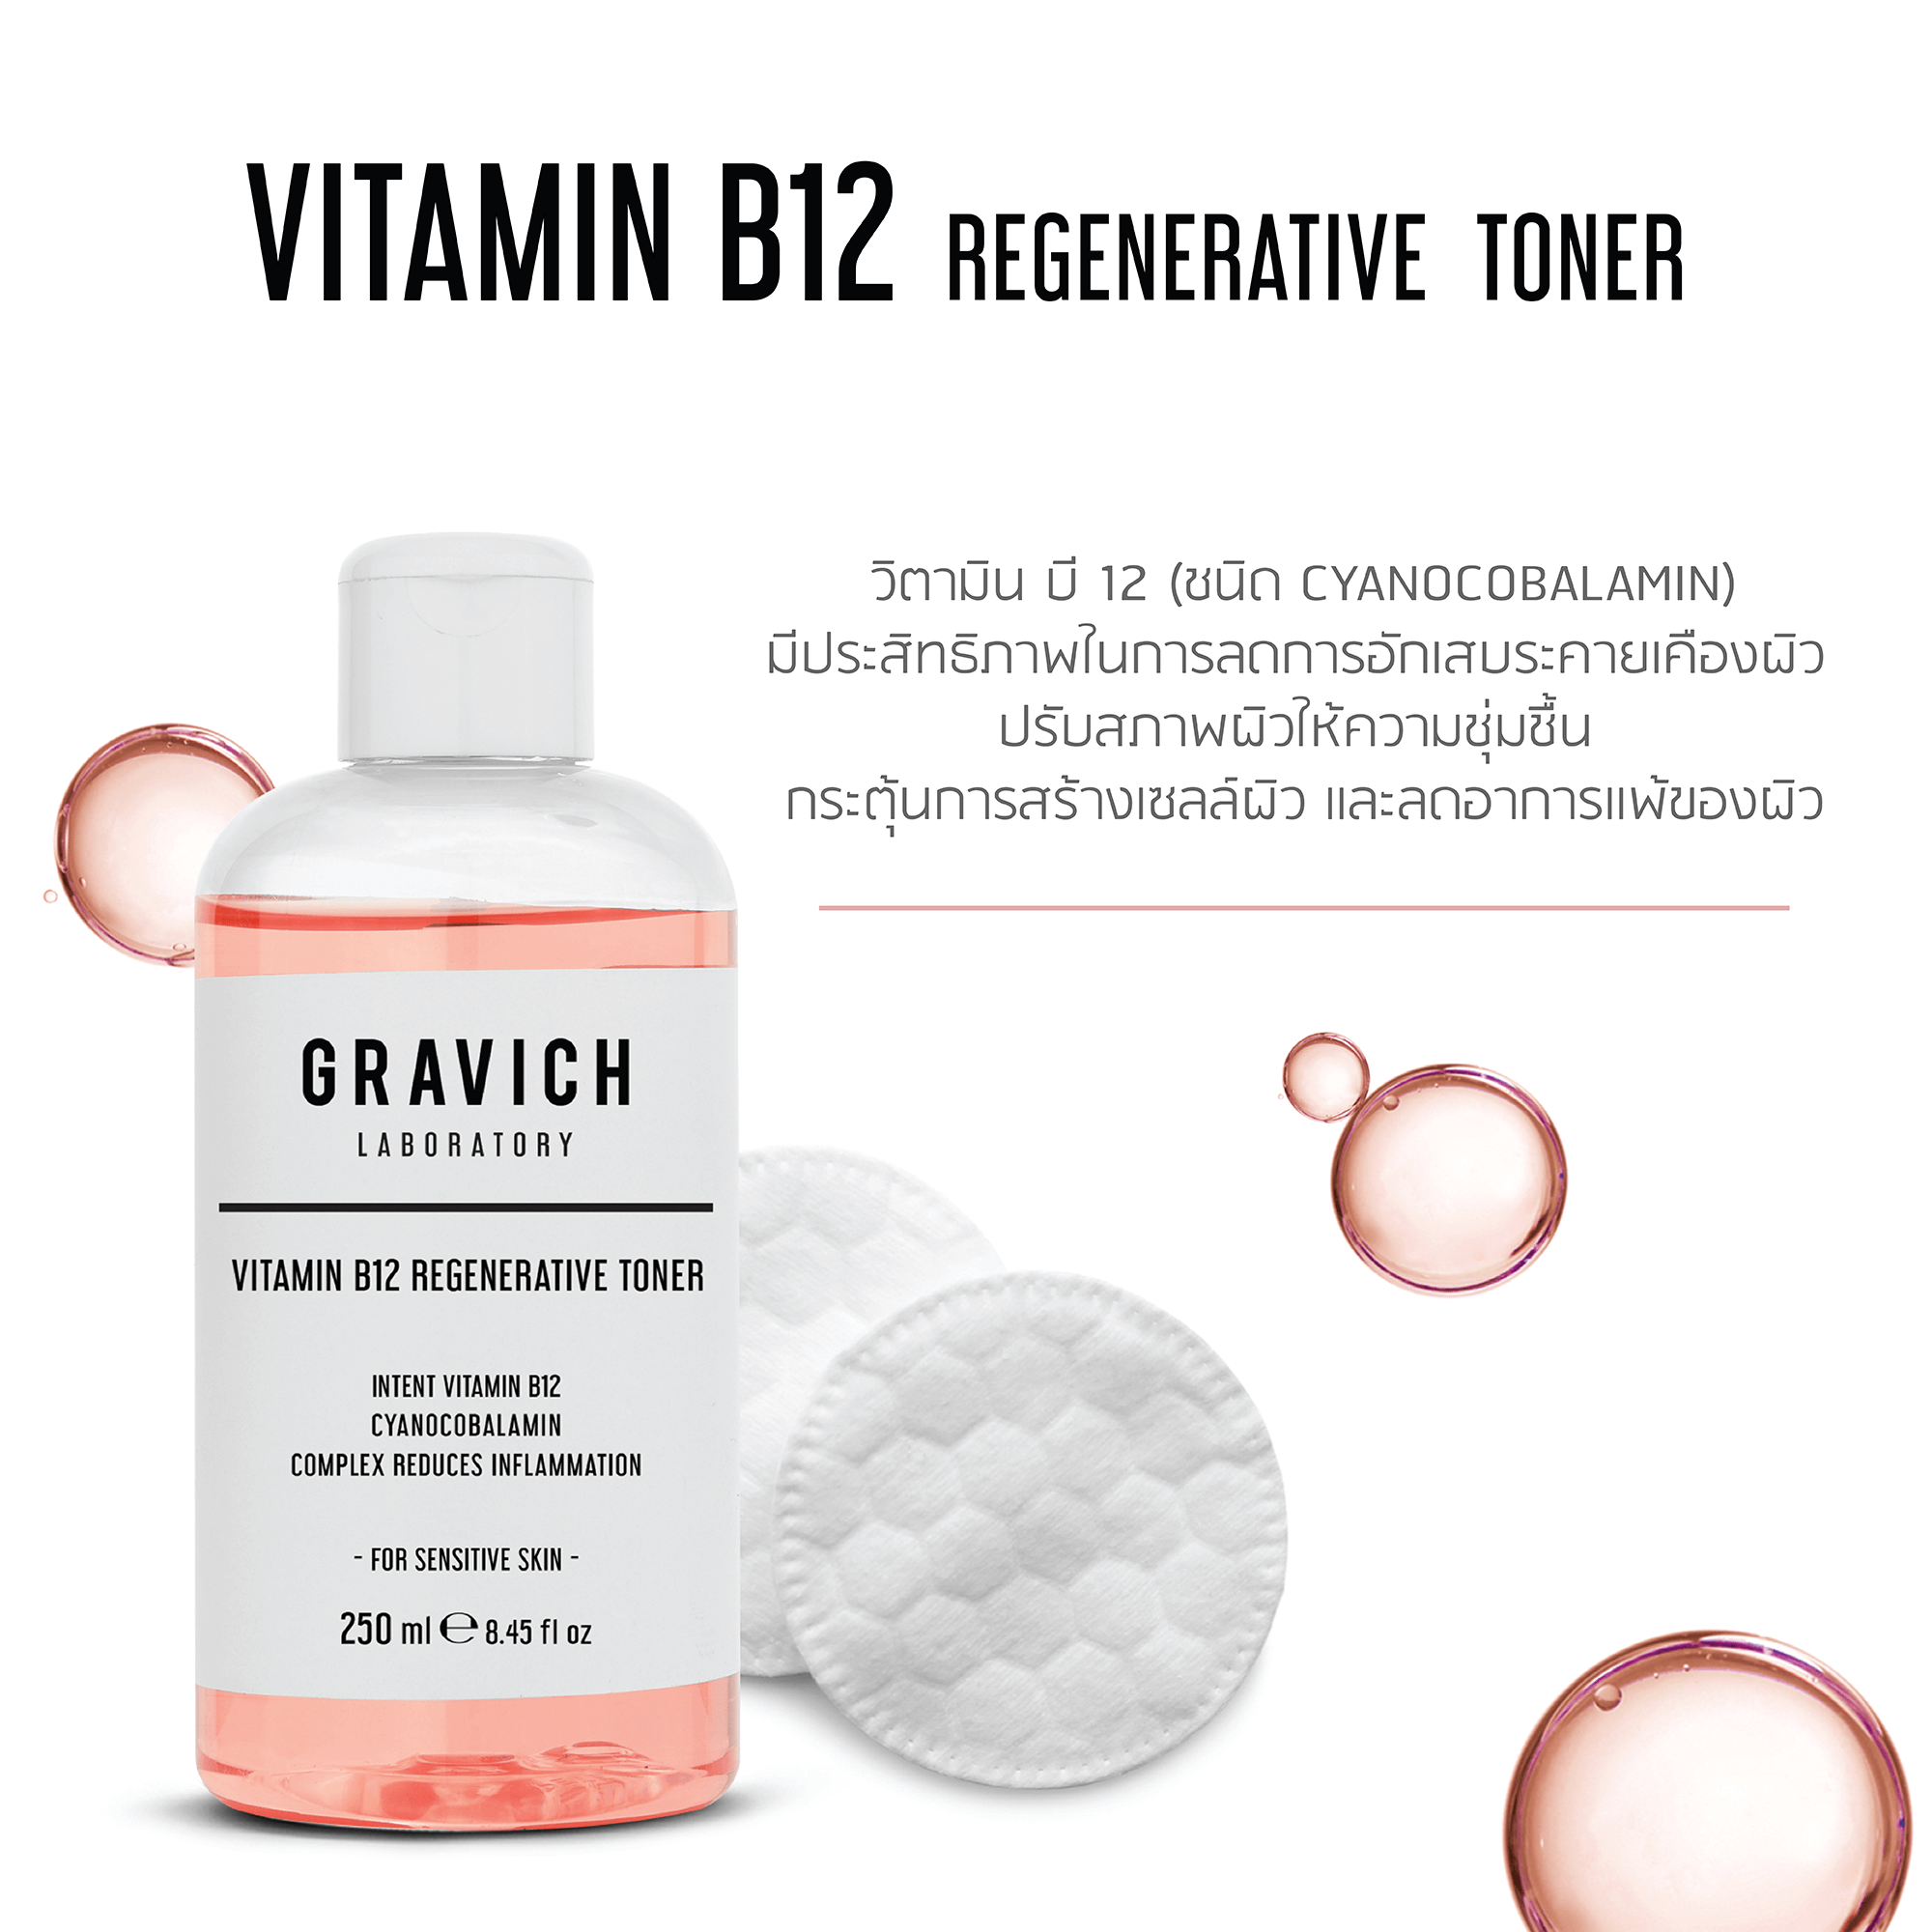 Gravich Vitamin B12 Regenarative Toner